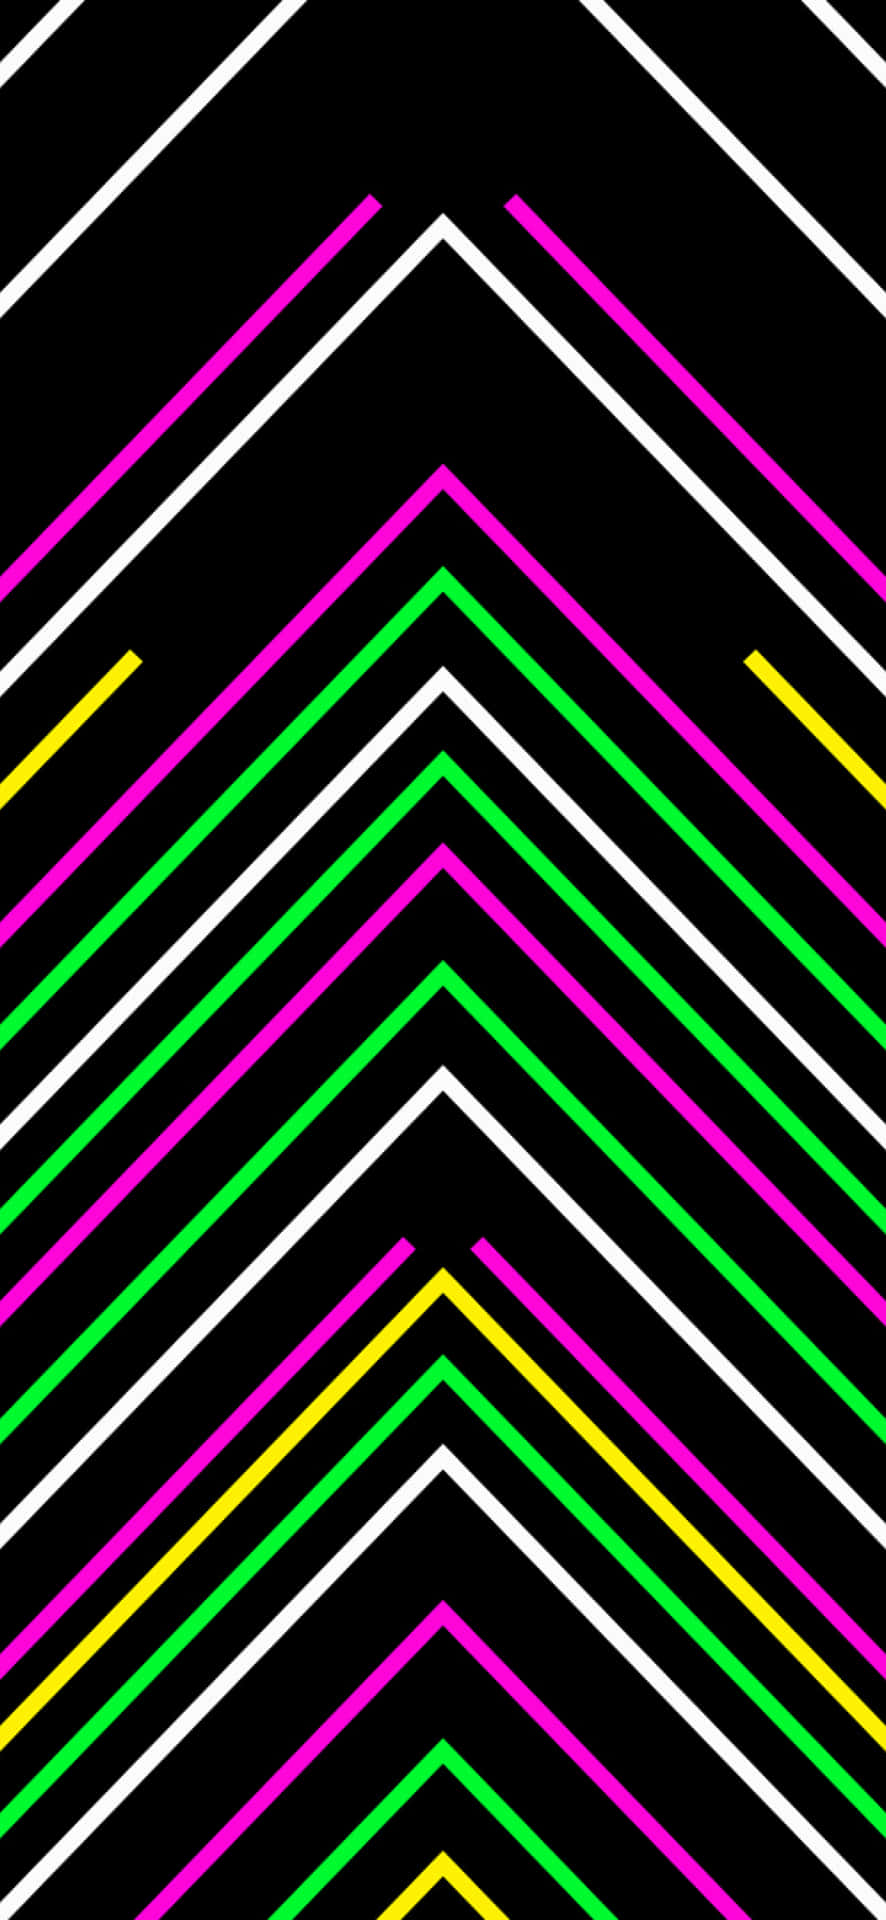 Neon Lines Abstract Pattern.jpg Wallpaper